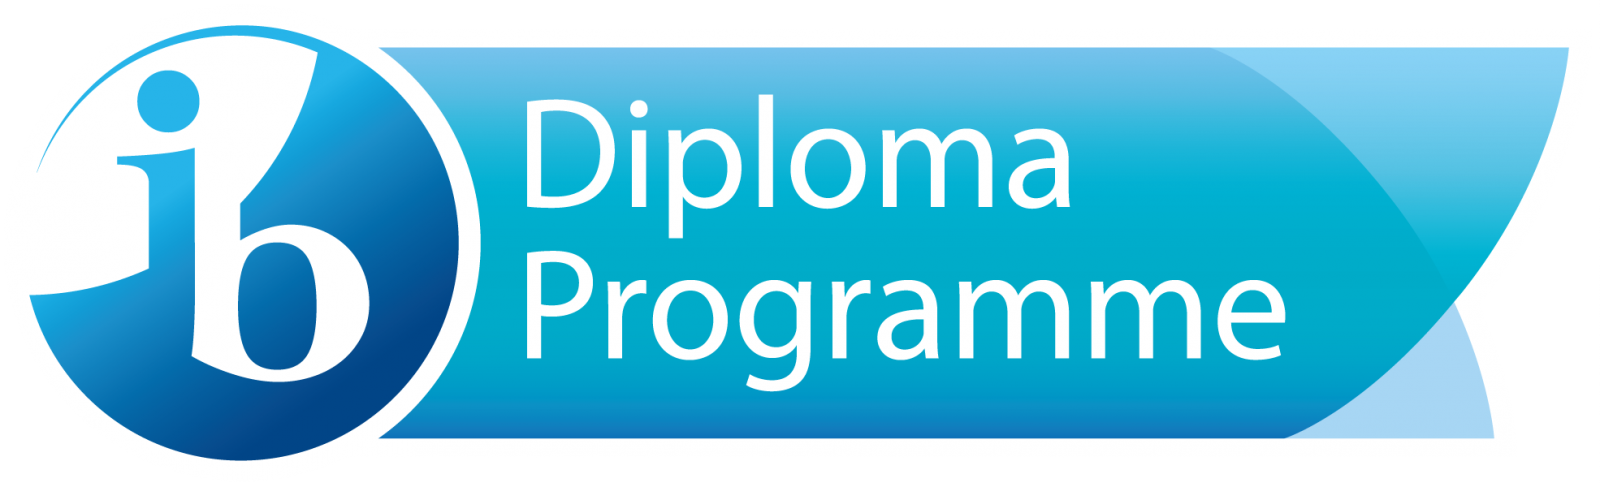 dp-programme-logo-en.png